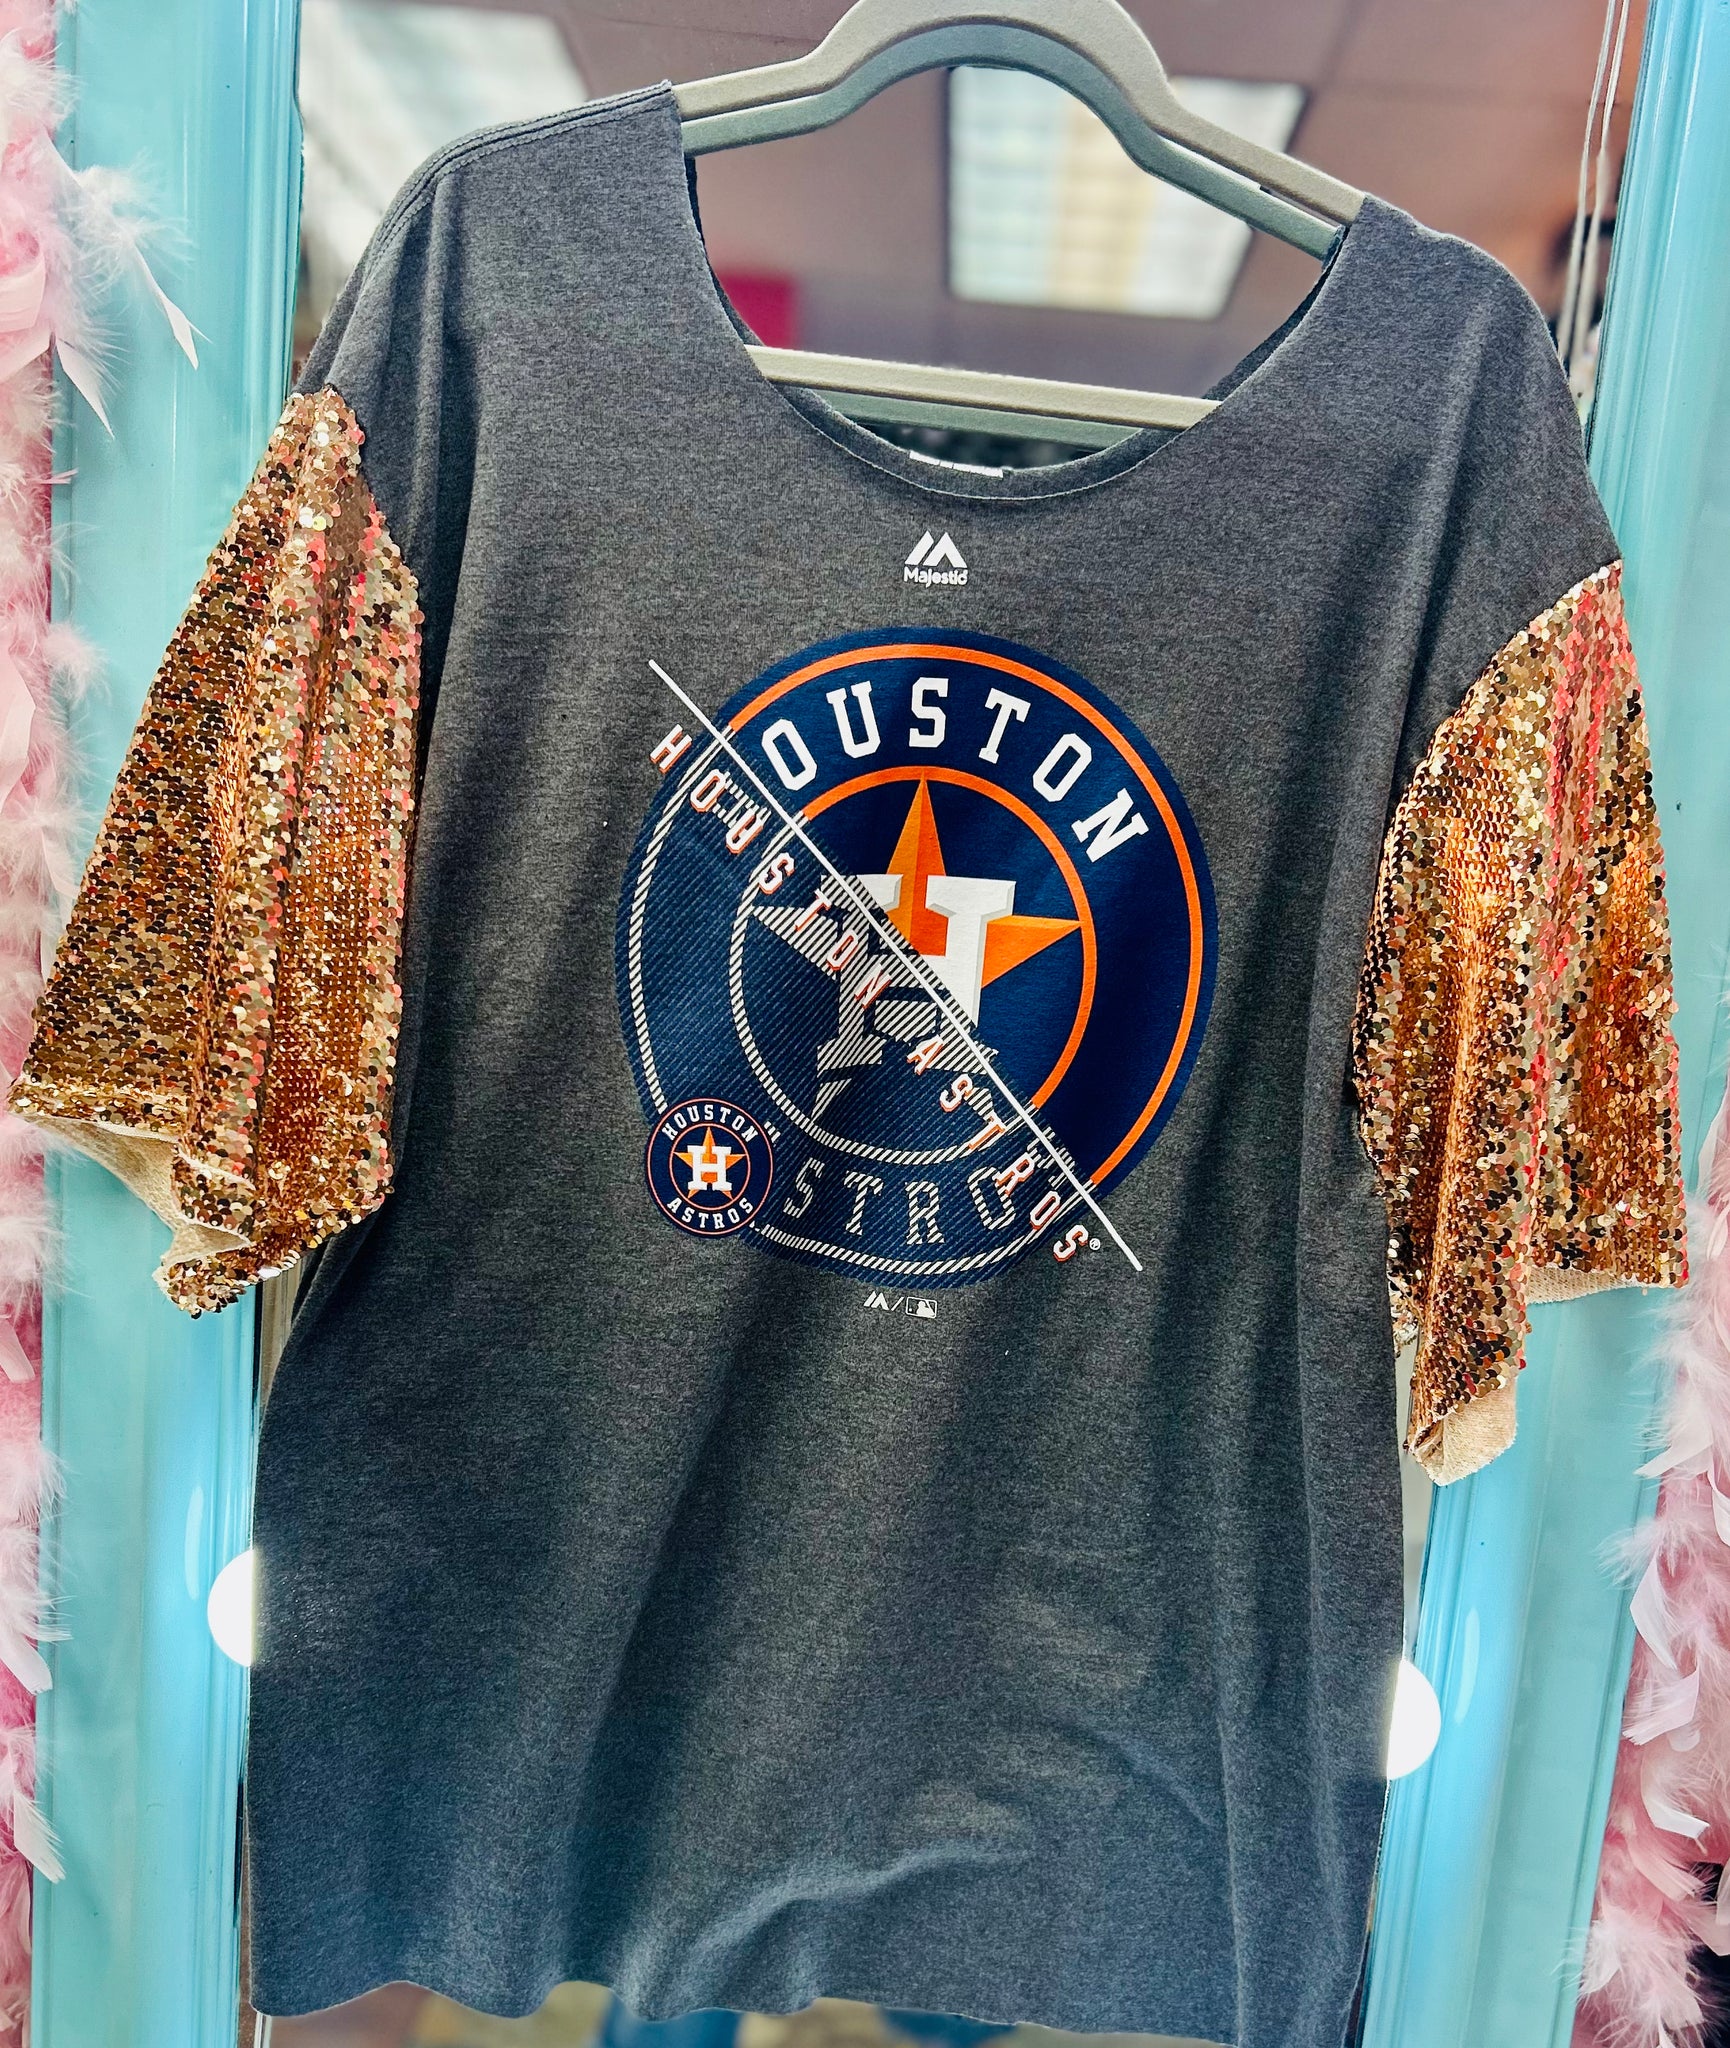 Astros Glitter Baseball Shirt – God's Will Designs